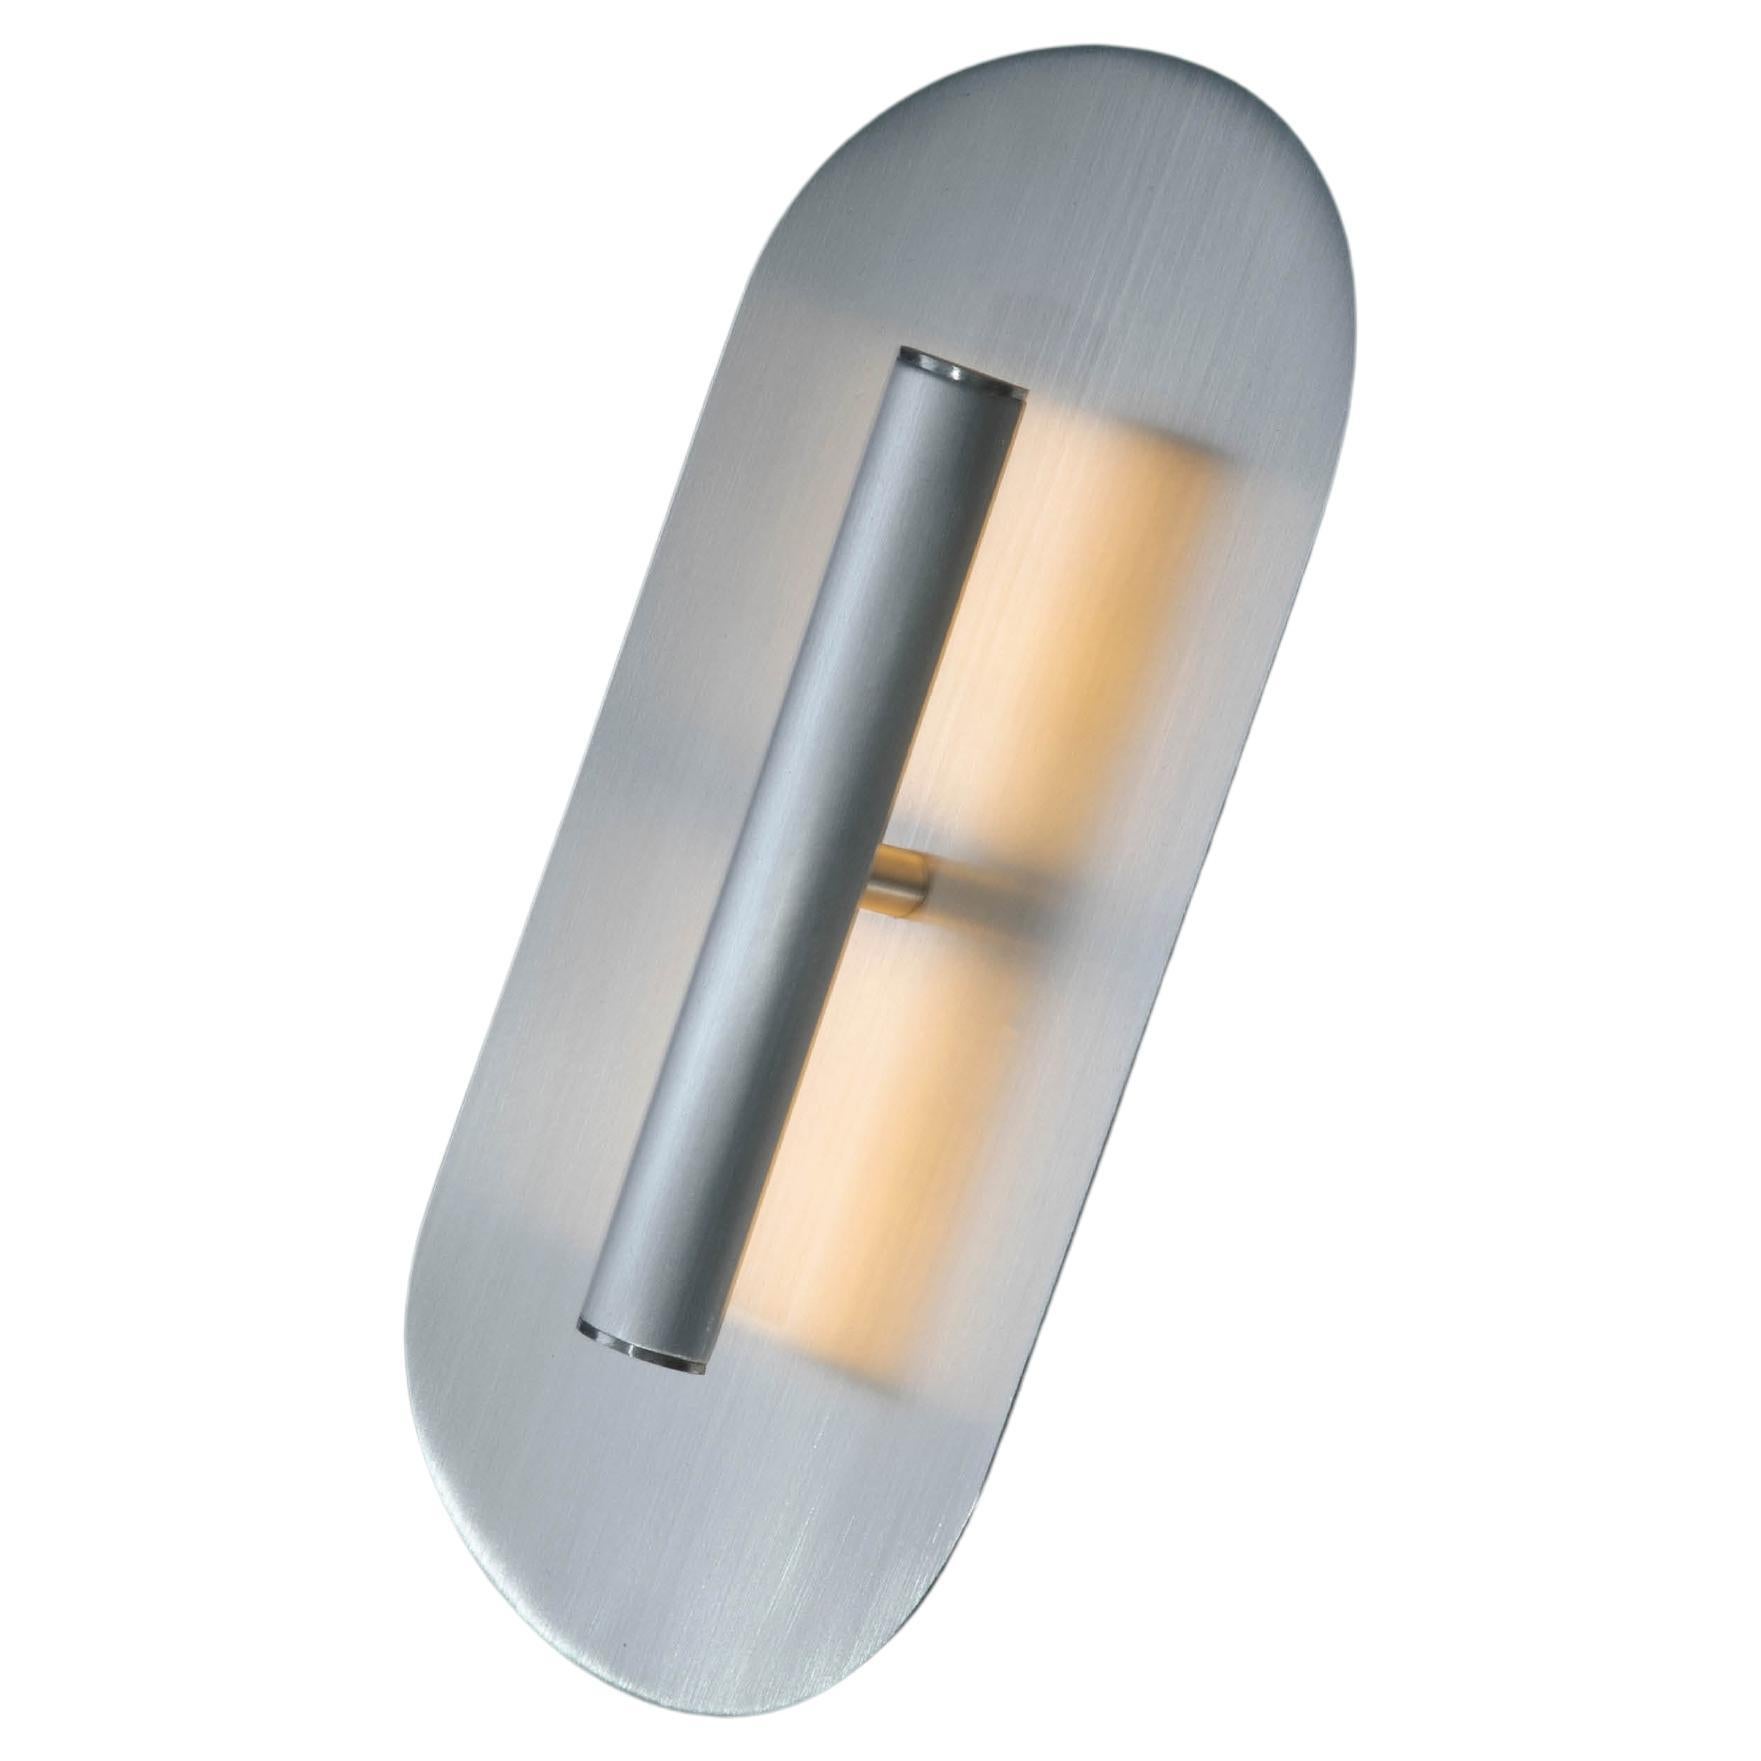 Reflektor-Wandleuchte 300, LED-Leuchte, roh gebürstetes Aluminium-Metall